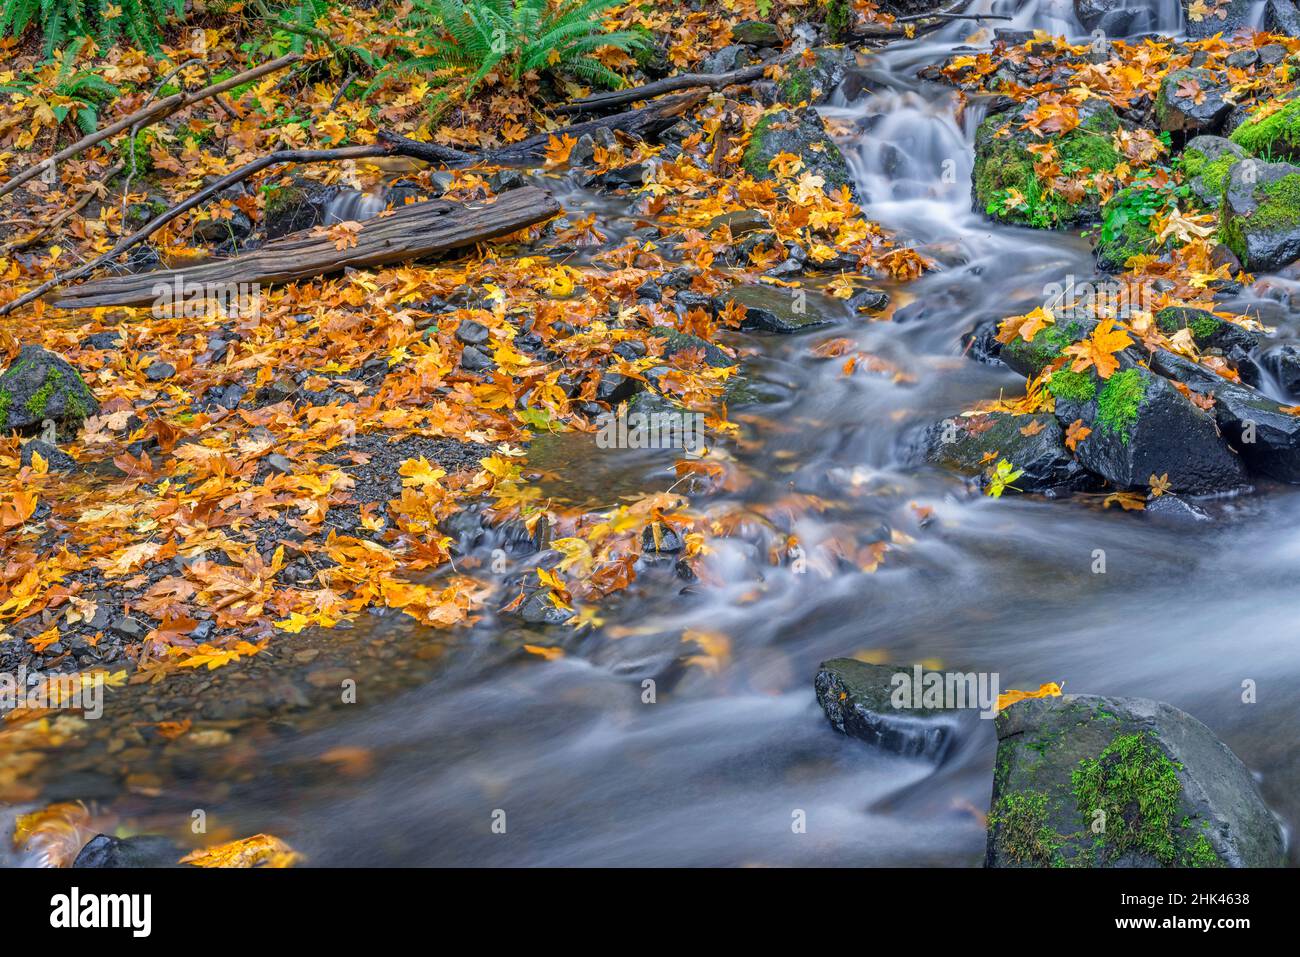 USA, Oregon. Columbia River Gorge National Scenic Area, Hungvation Creek State Park, Hungvation Creek im Herbst mit gefallenen Ahornblättern, dunklen Vulkanen Stockfoto